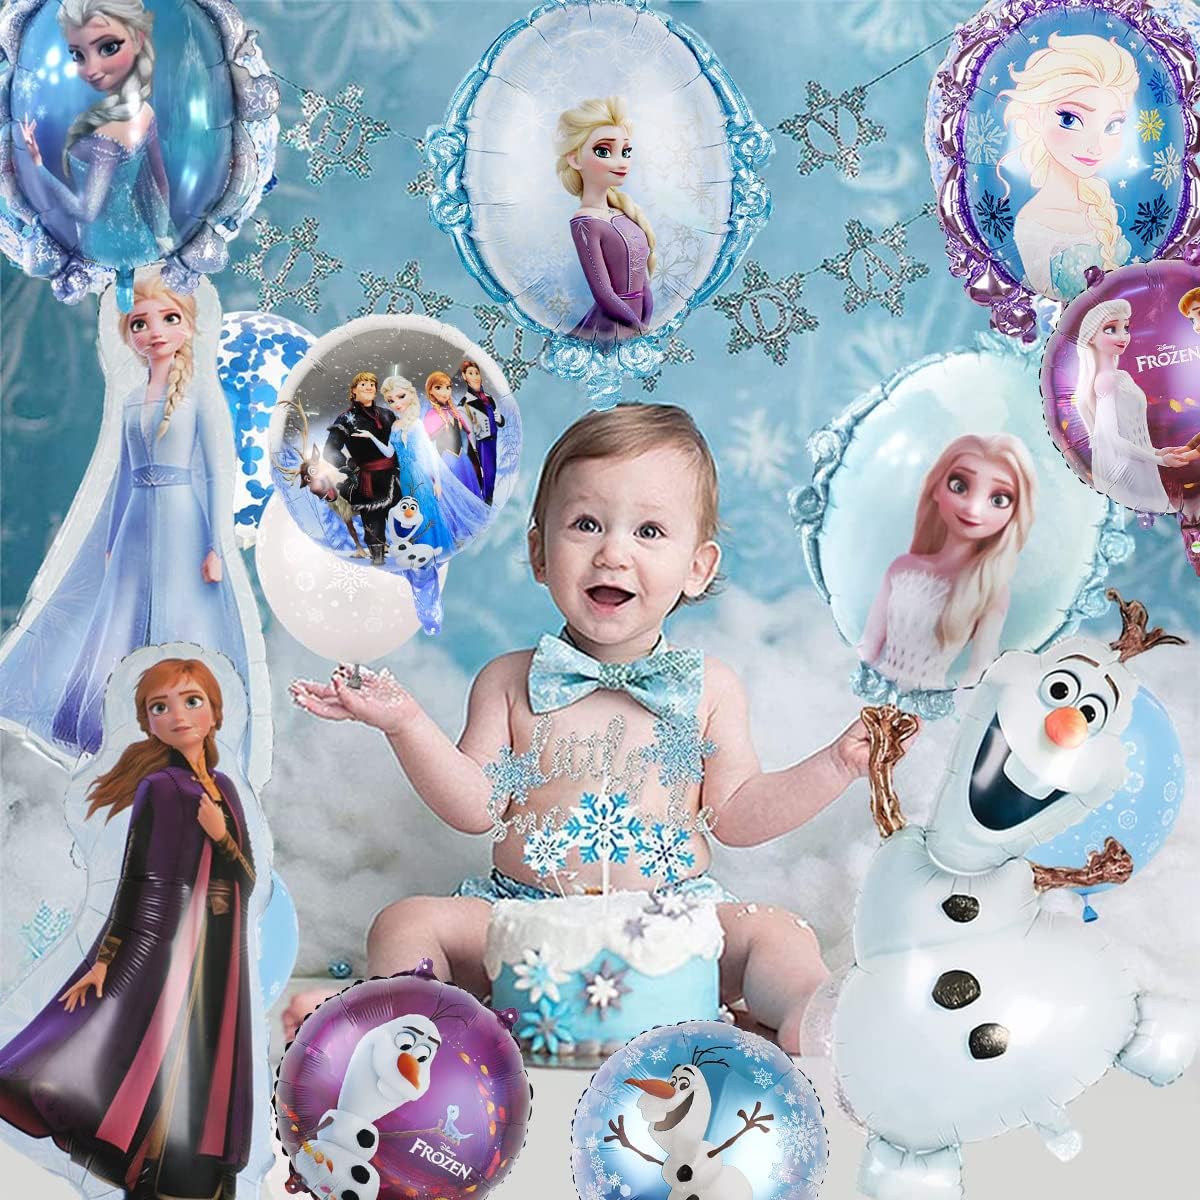 Frozen Birthday Party Balloons Decorations, Elsa Anna,Olaf, Snowflake Balloon Decoration